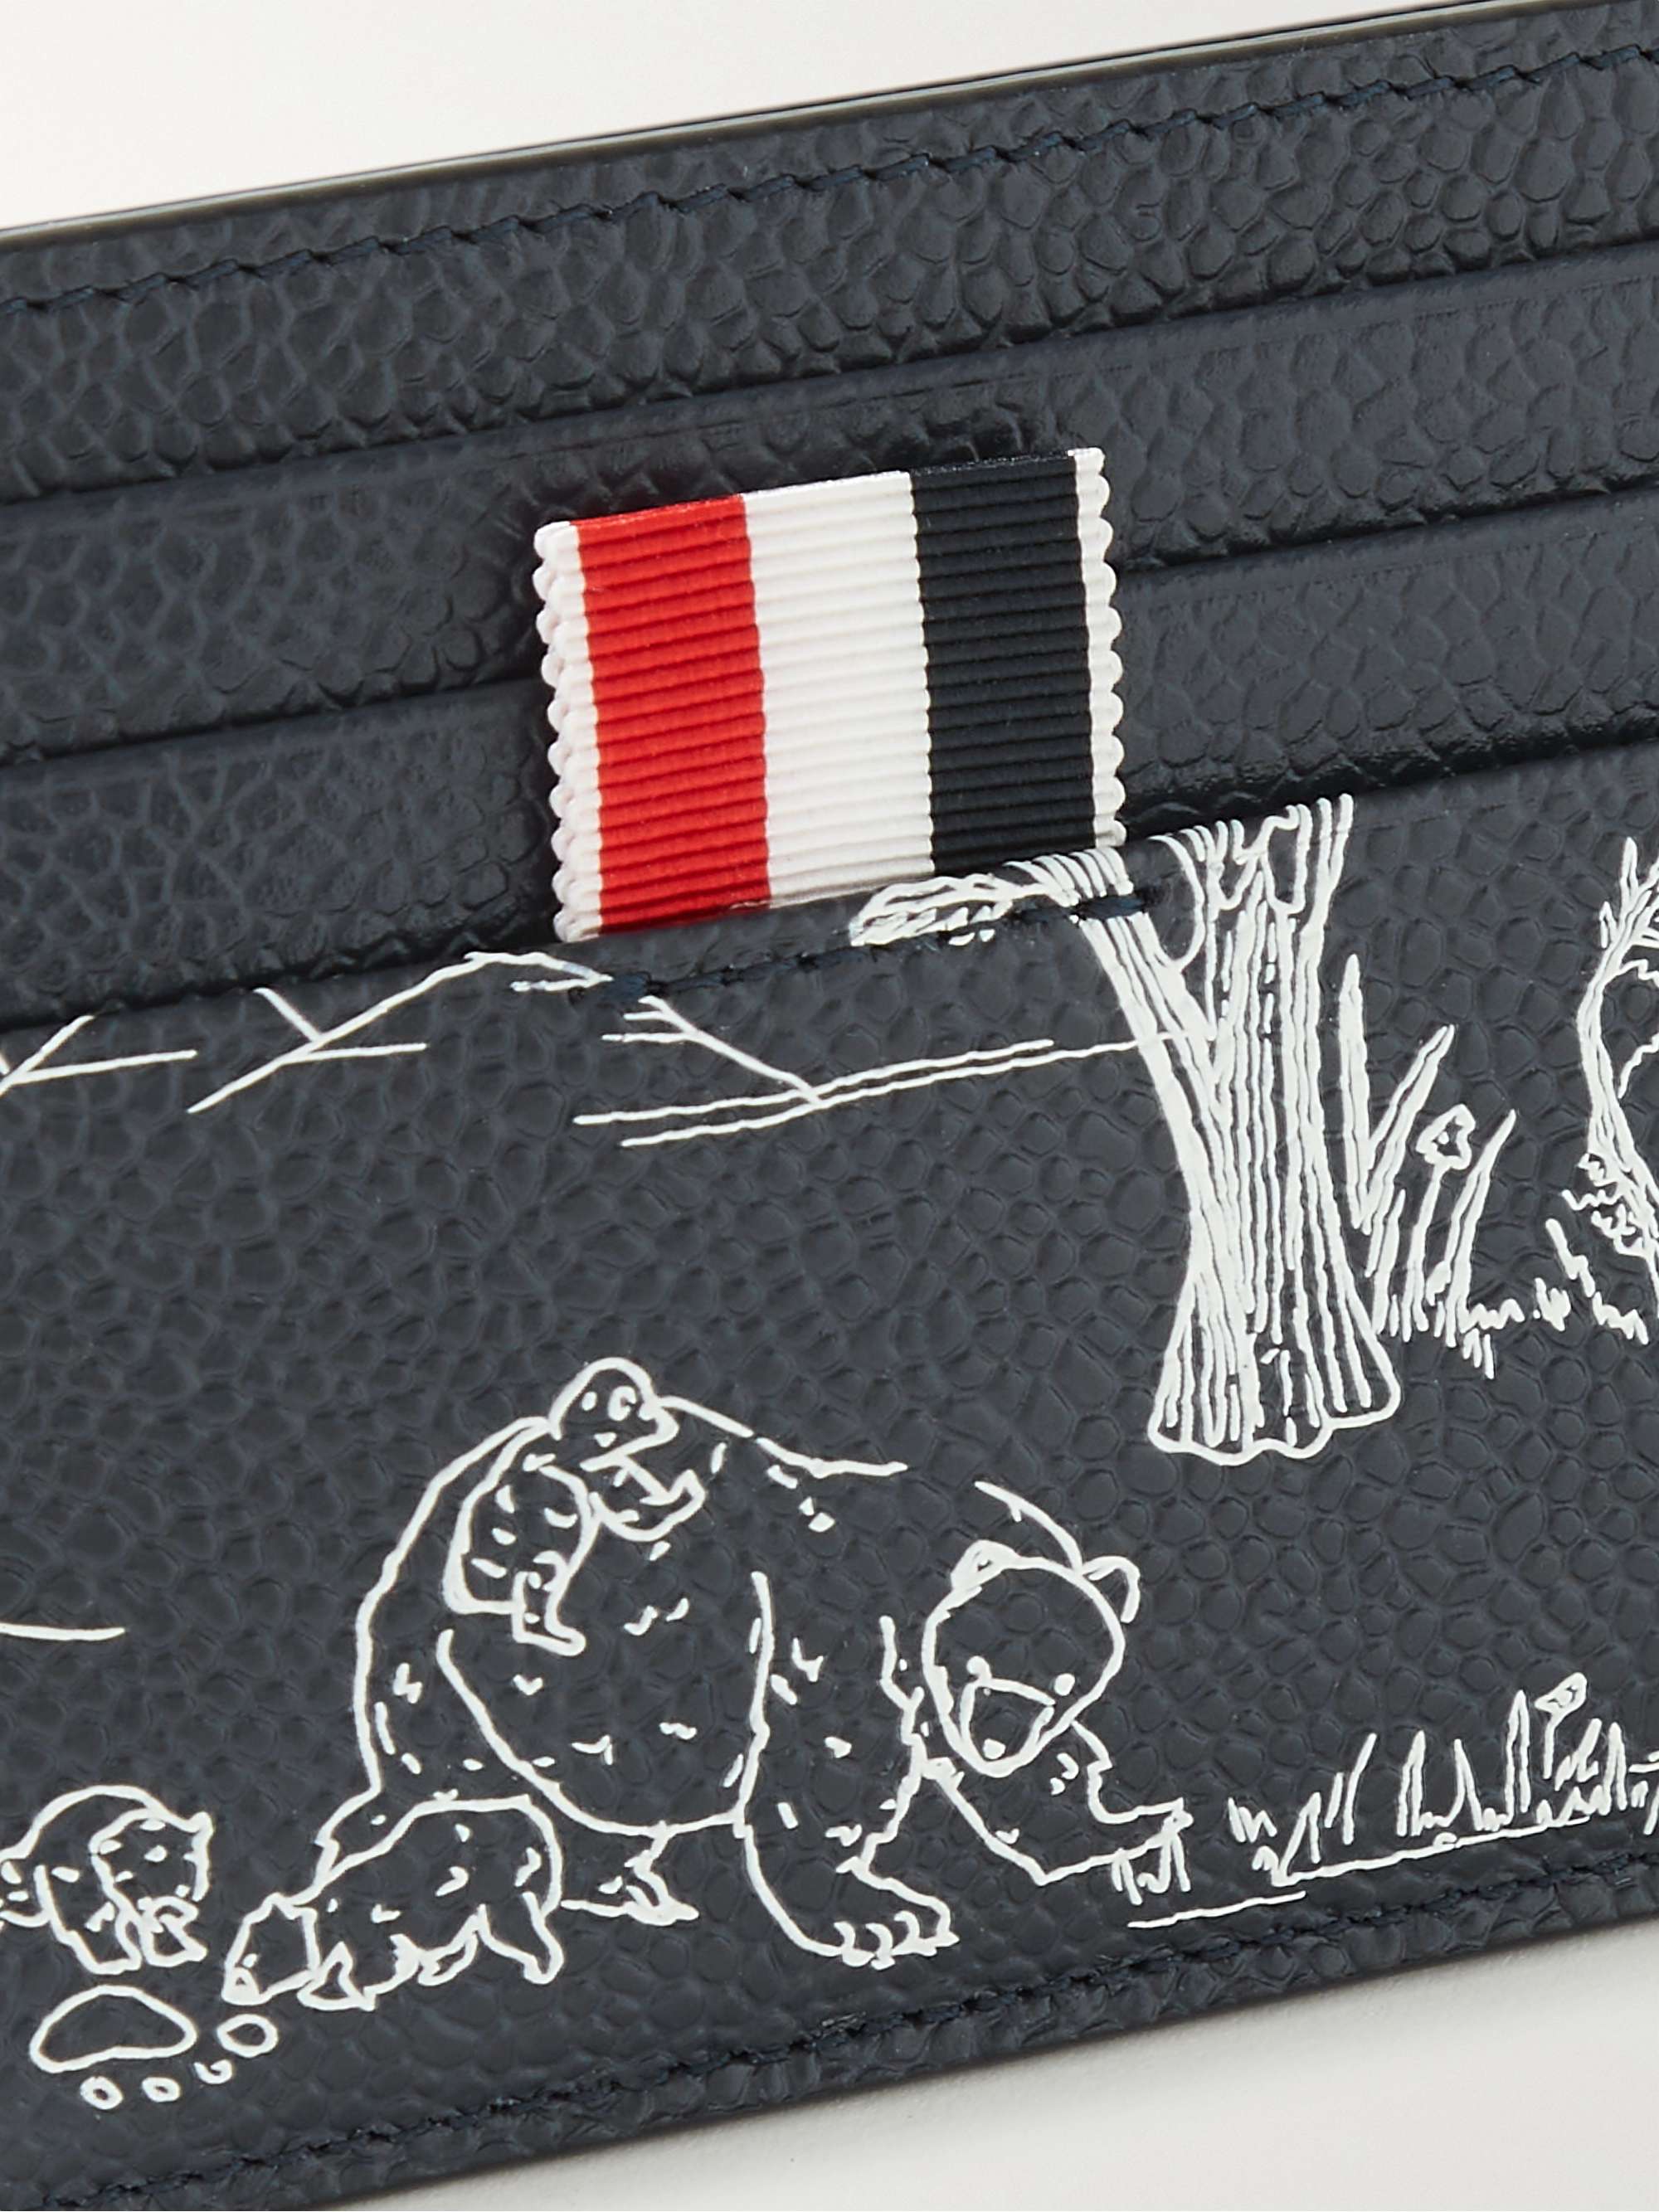 THOM BROWNE Striped Grosgrain-Trimmed Printed Pebble-Grain Leather Cardholder